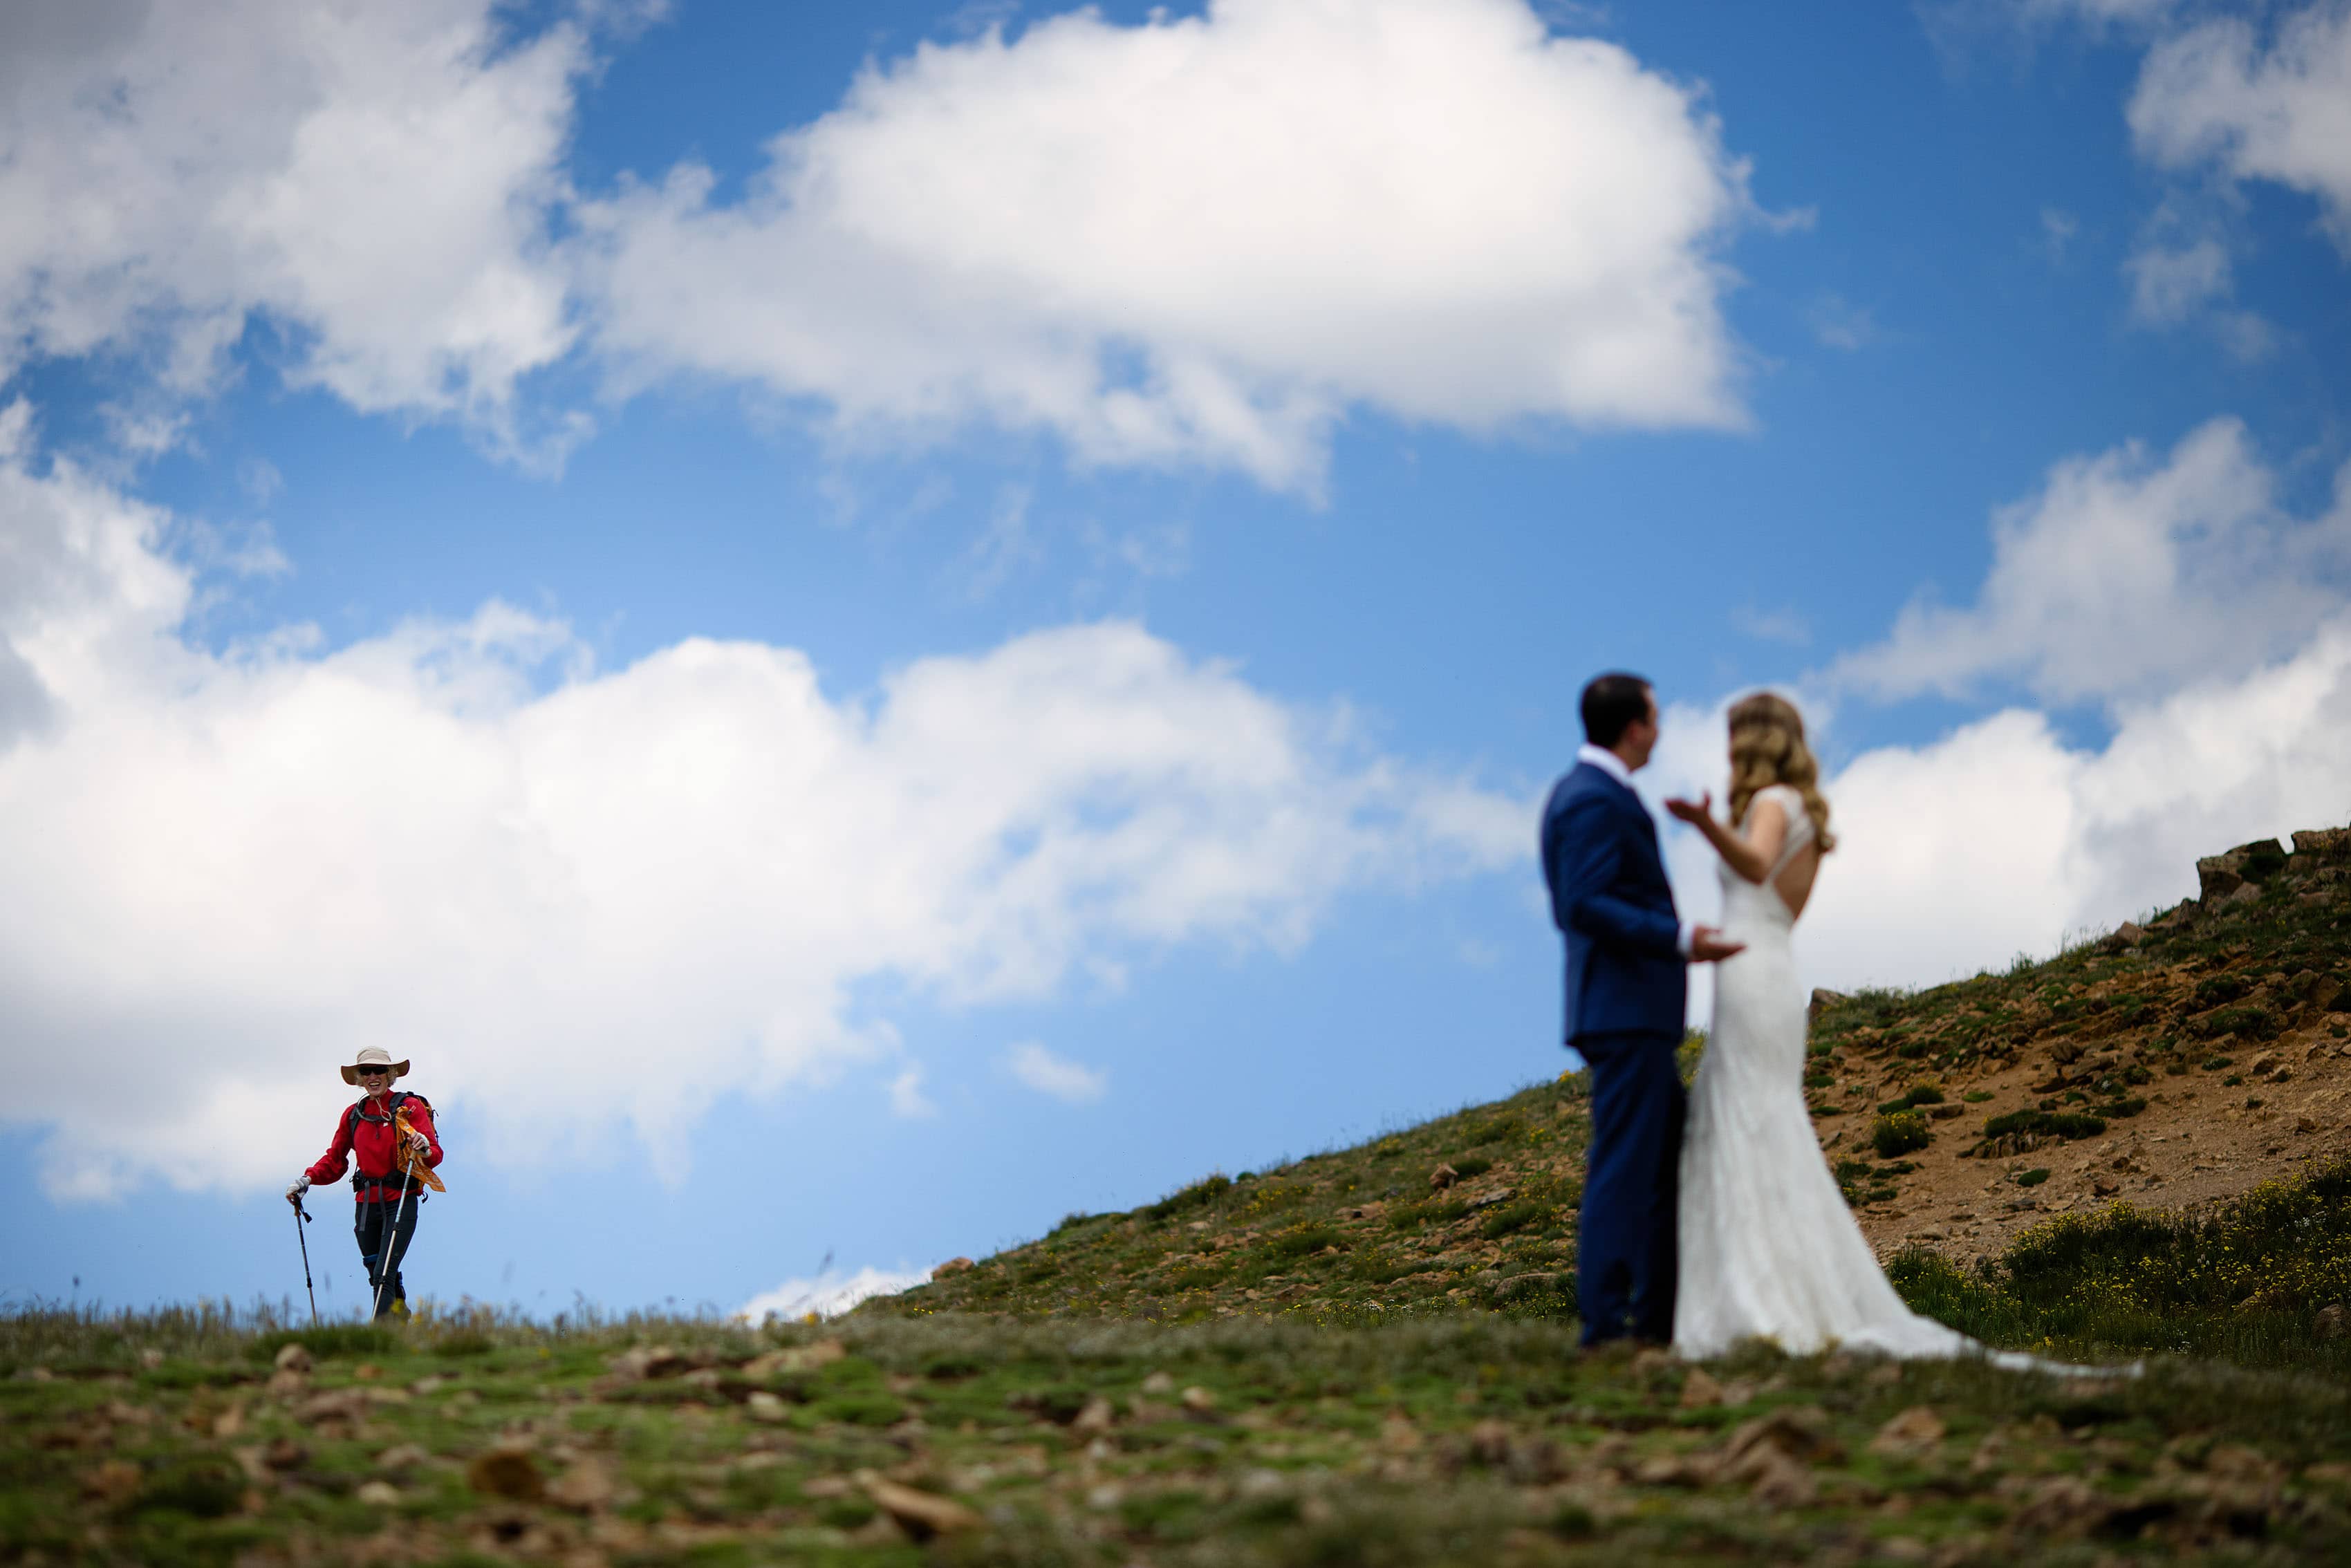 The bride gestures towards a hiker on Loveland Pass